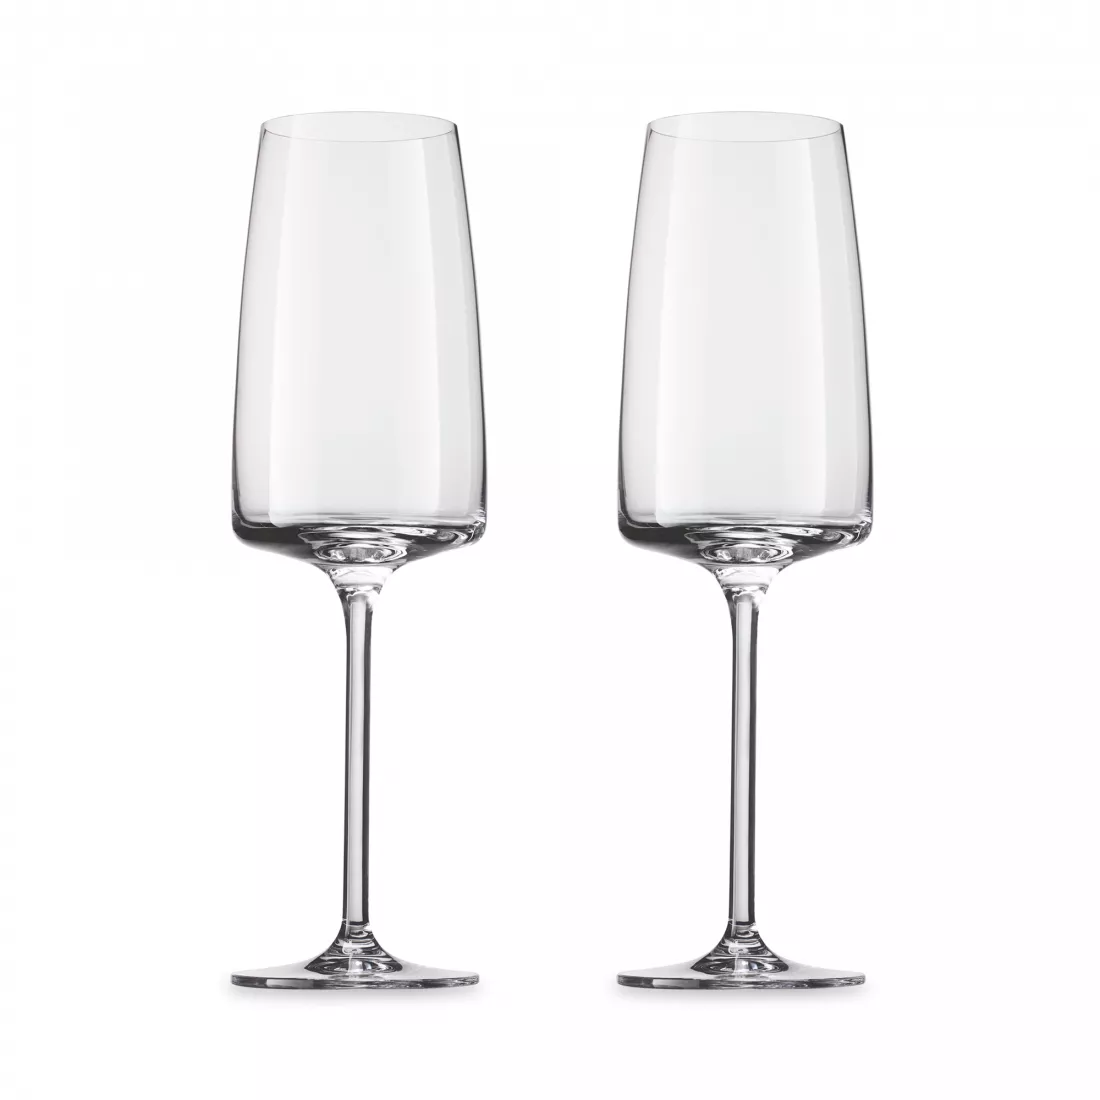 ZWIESEL GLAS Набор бокалов для игристых вин Light and Fresh, объем 388 мл, 2 шт., серия Vivid Senses